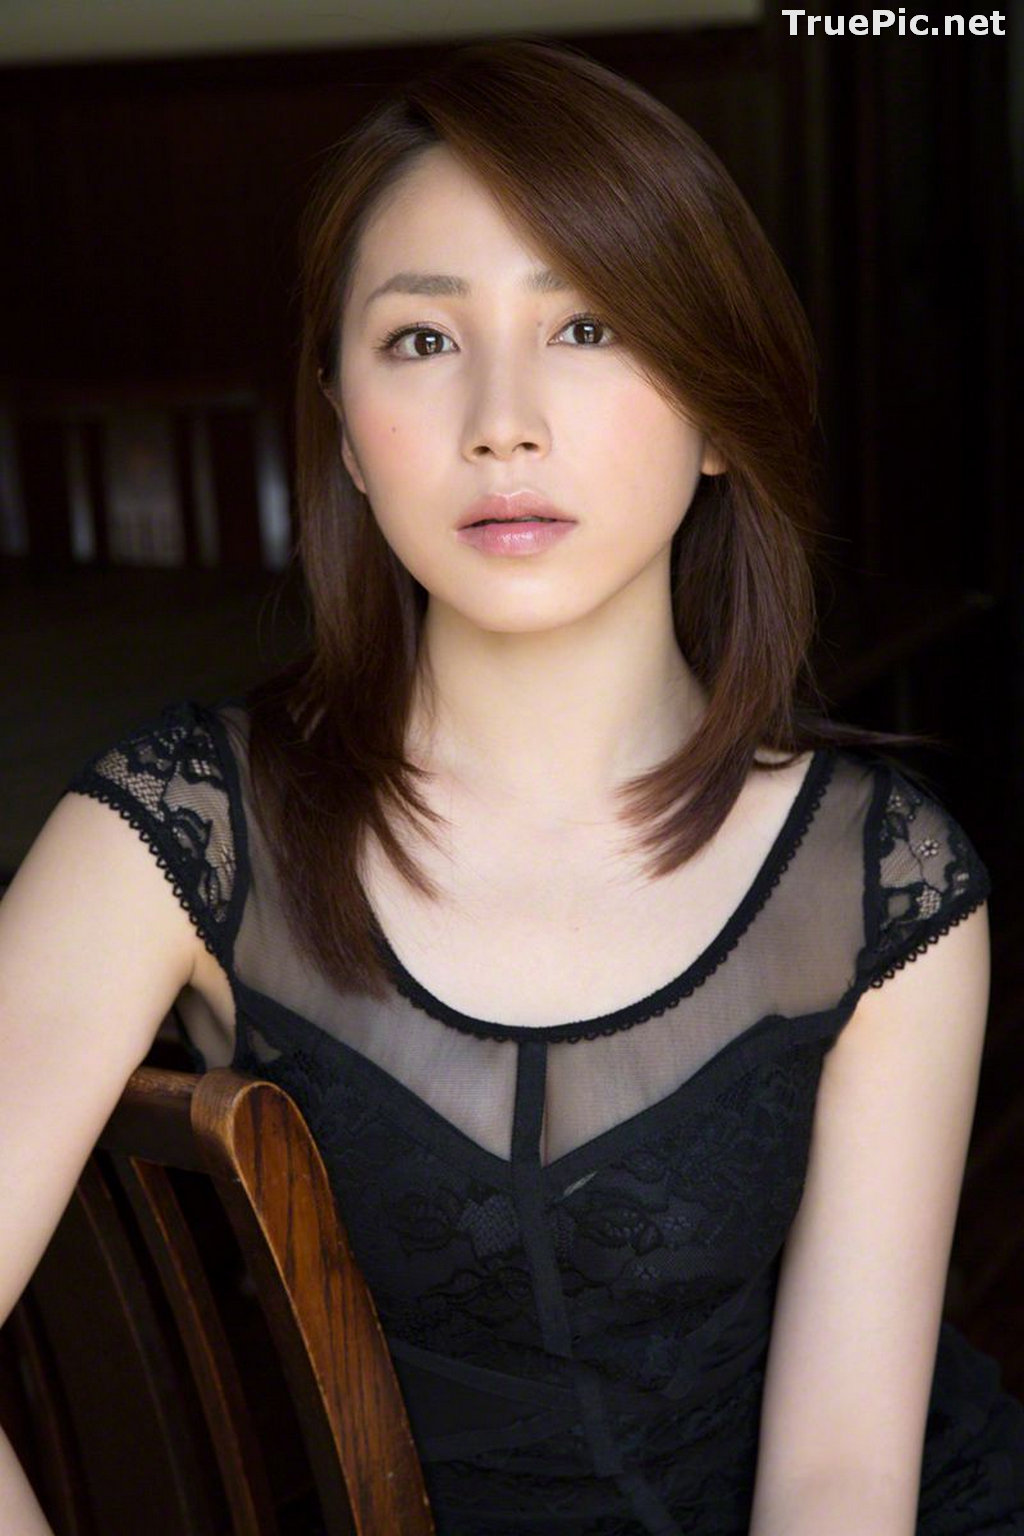 Image [Wanibooks Jacket] No.129 - Japanese Singer and Actress - You Kikkawa - TruePic.net - Picture-21